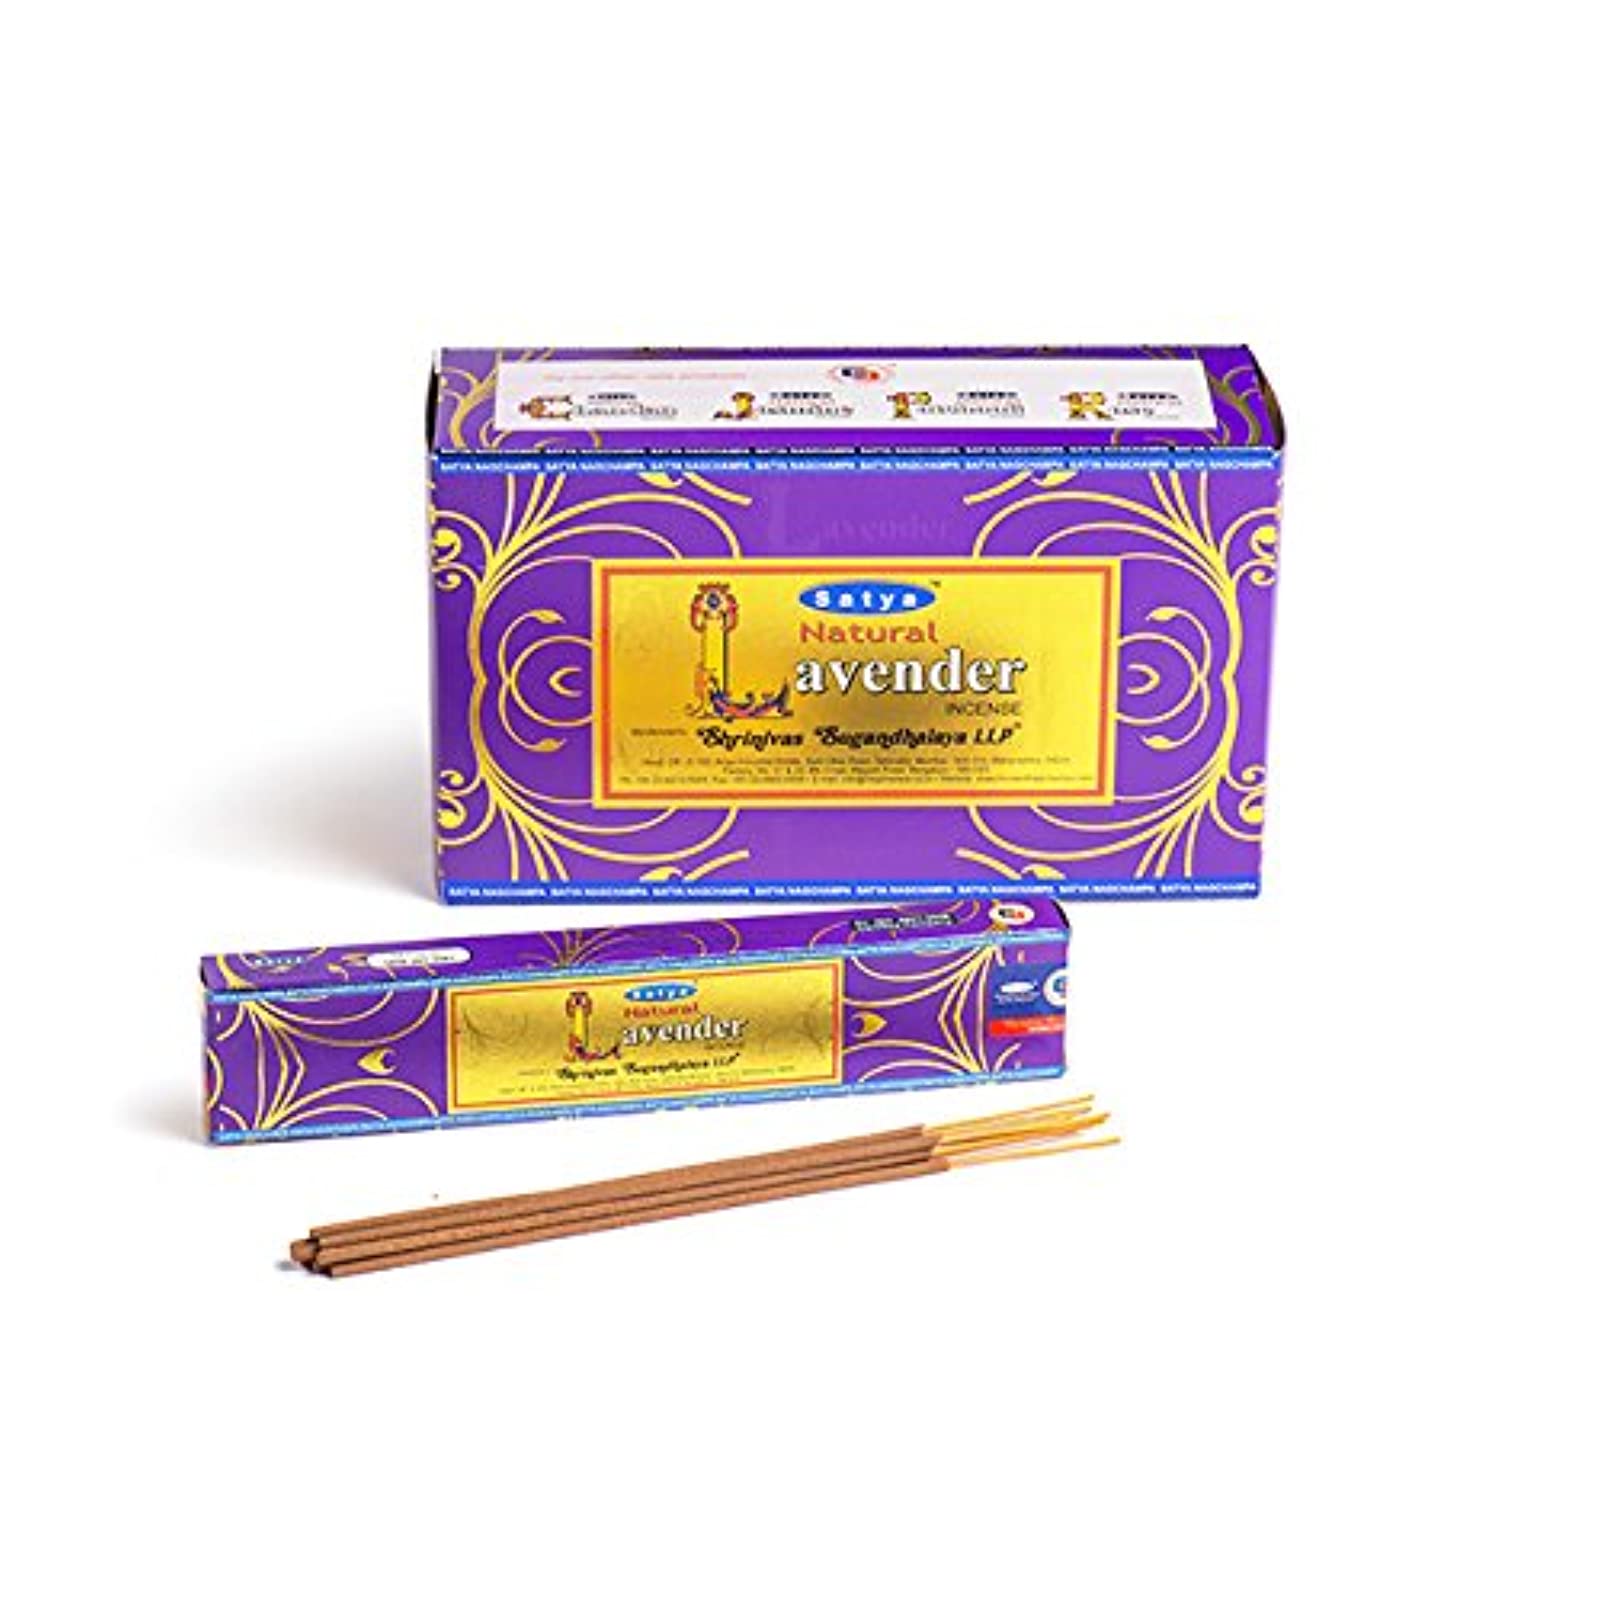 Satya Natural lavender 15gms Incense Sticks